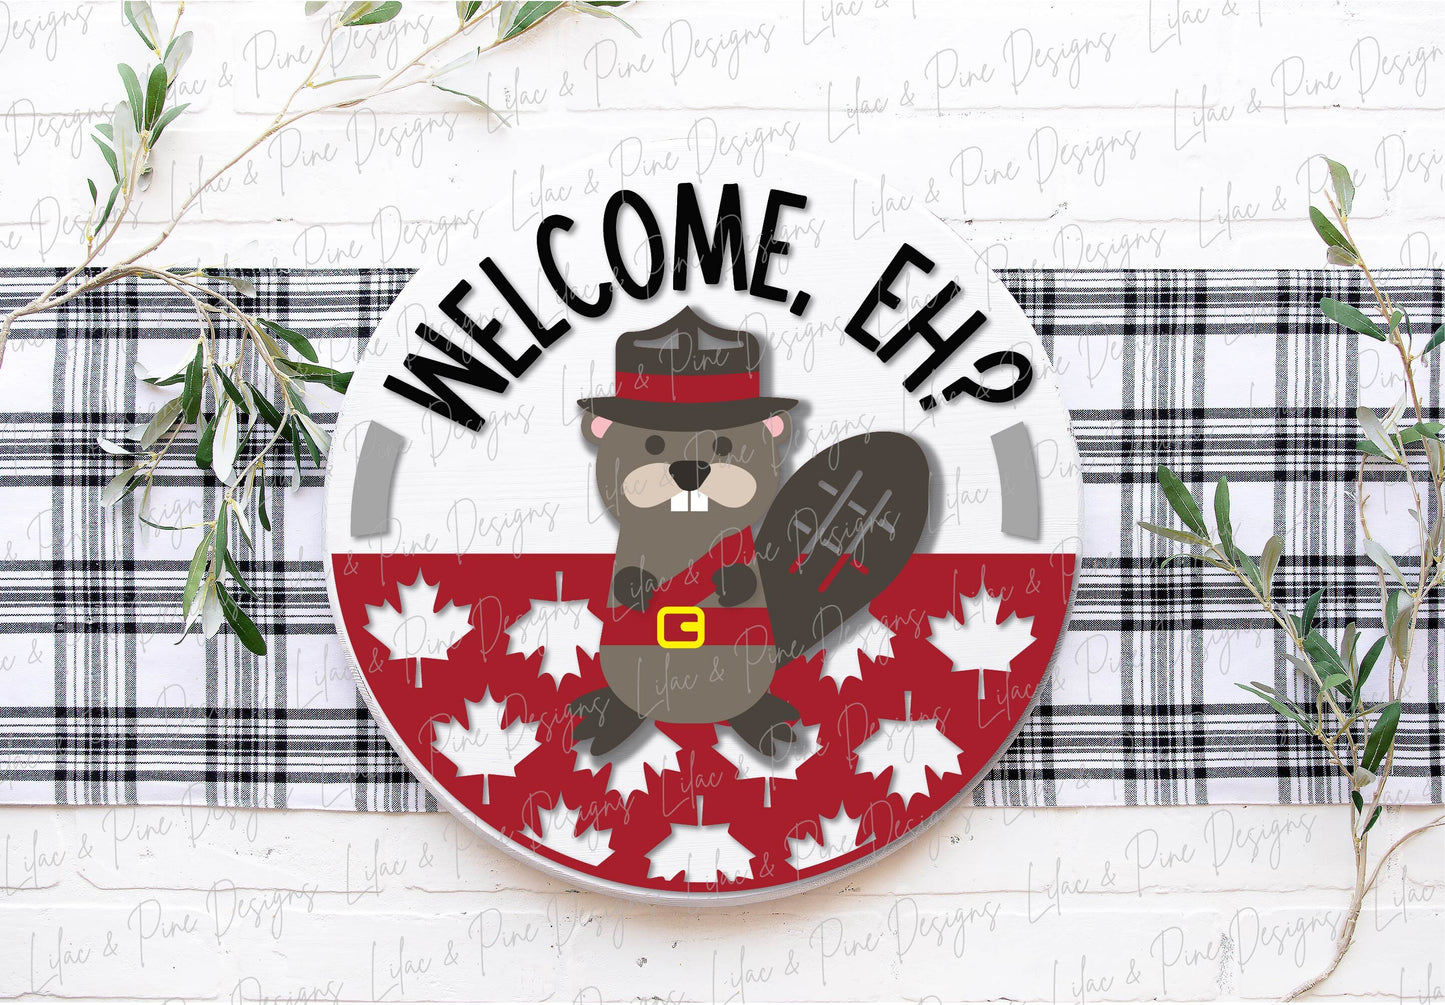 Canadian door hanger SVG, Canada Eh welcome sign, Canada decor, Beaver Mountie SVG, maple leaf pattern, Glowforge cut file, laser SVG file